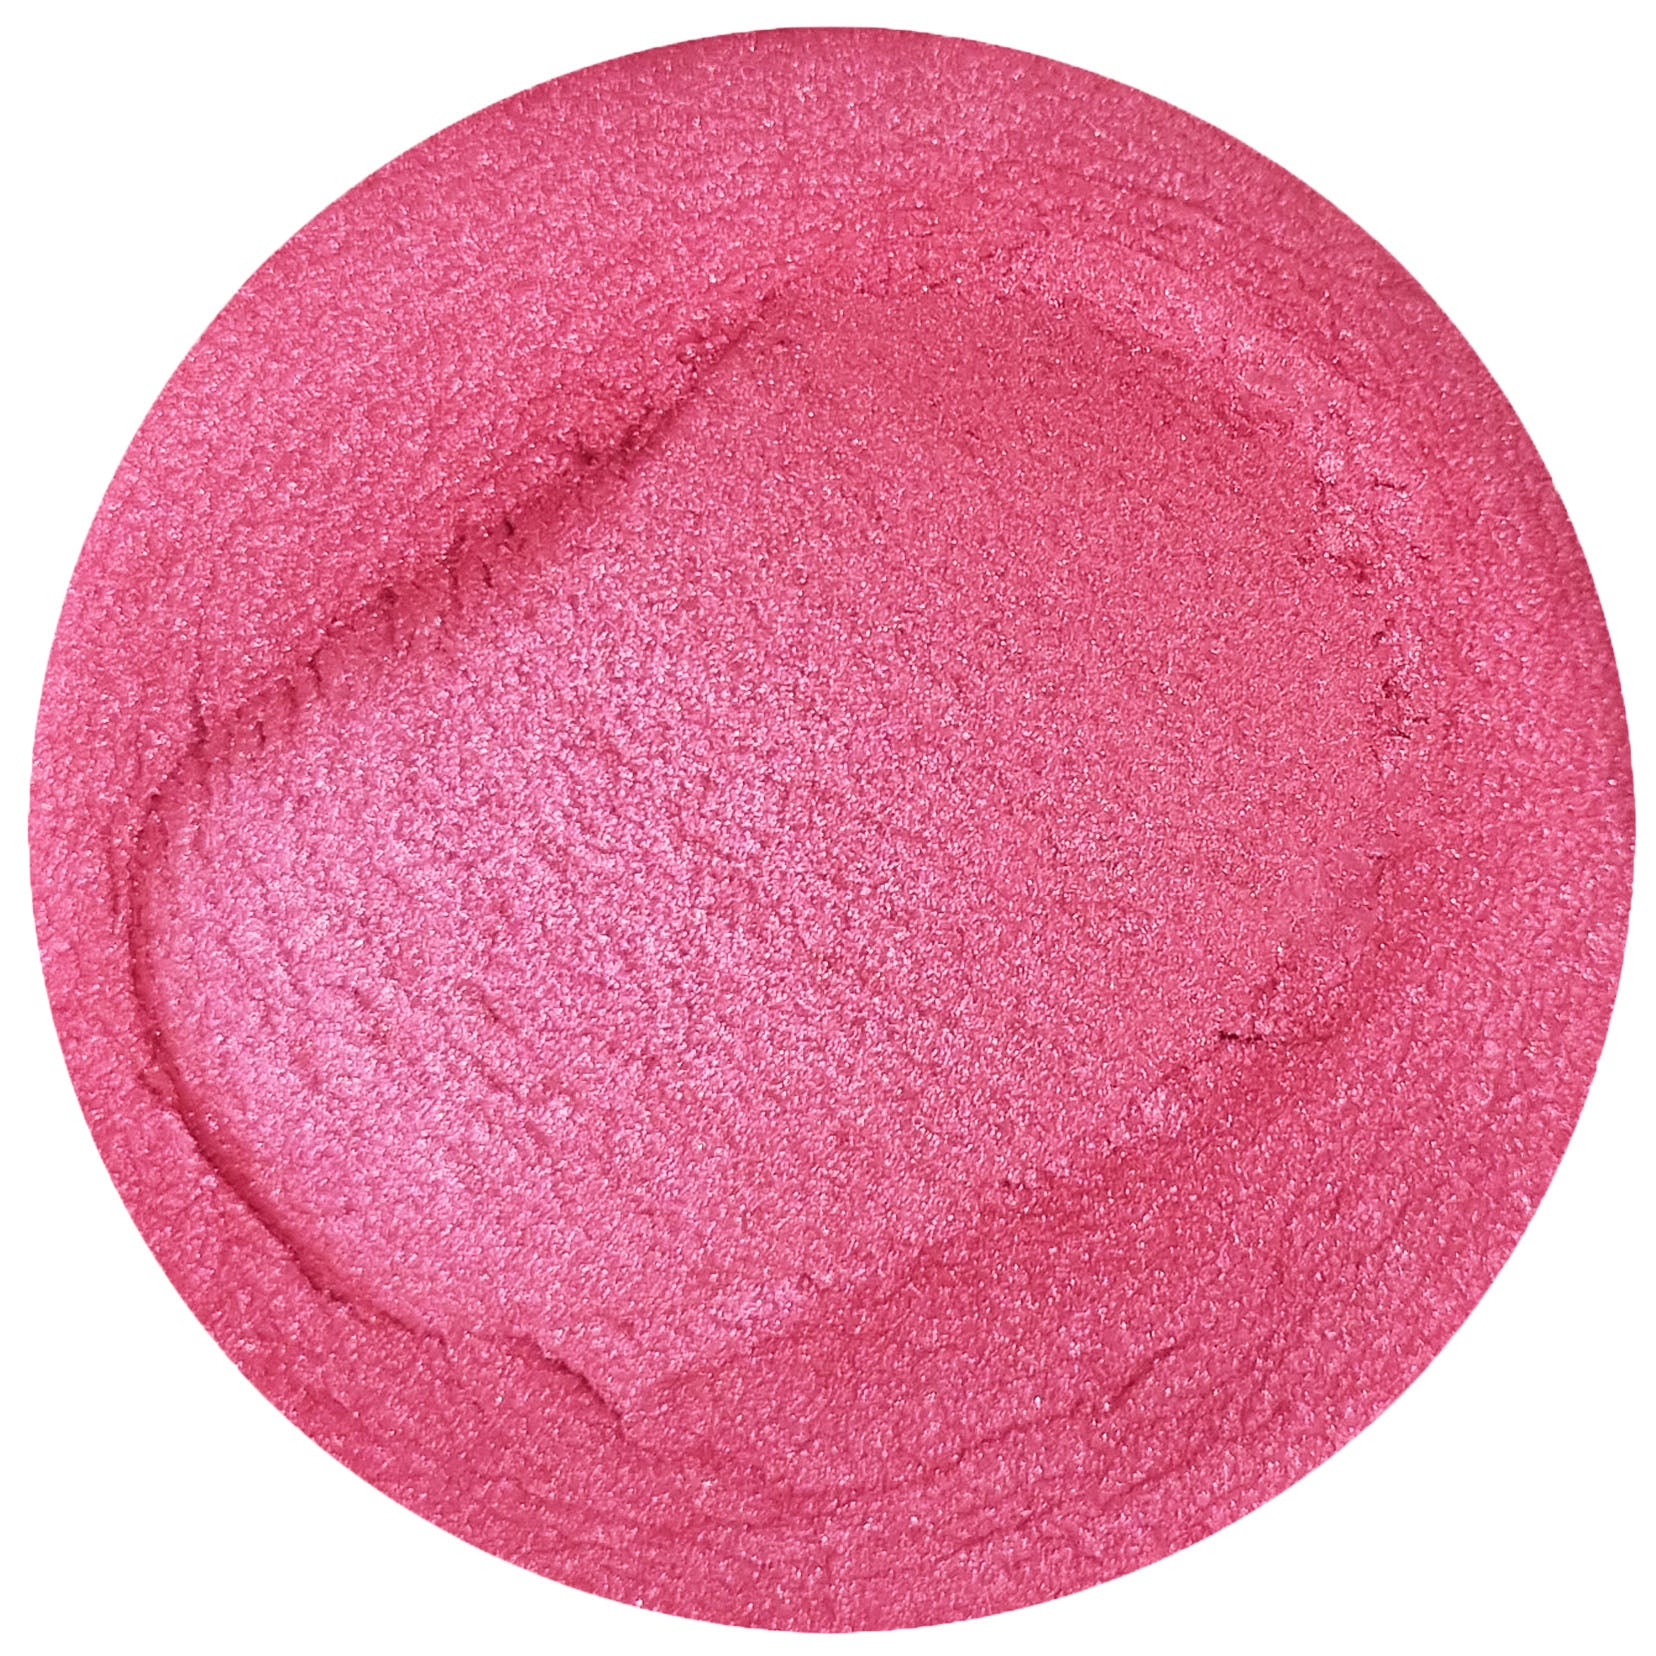 Fantasia Pink | Pearlescent Cosmetic Mica | Truly Personal Ltd | Wax Melt Glitter